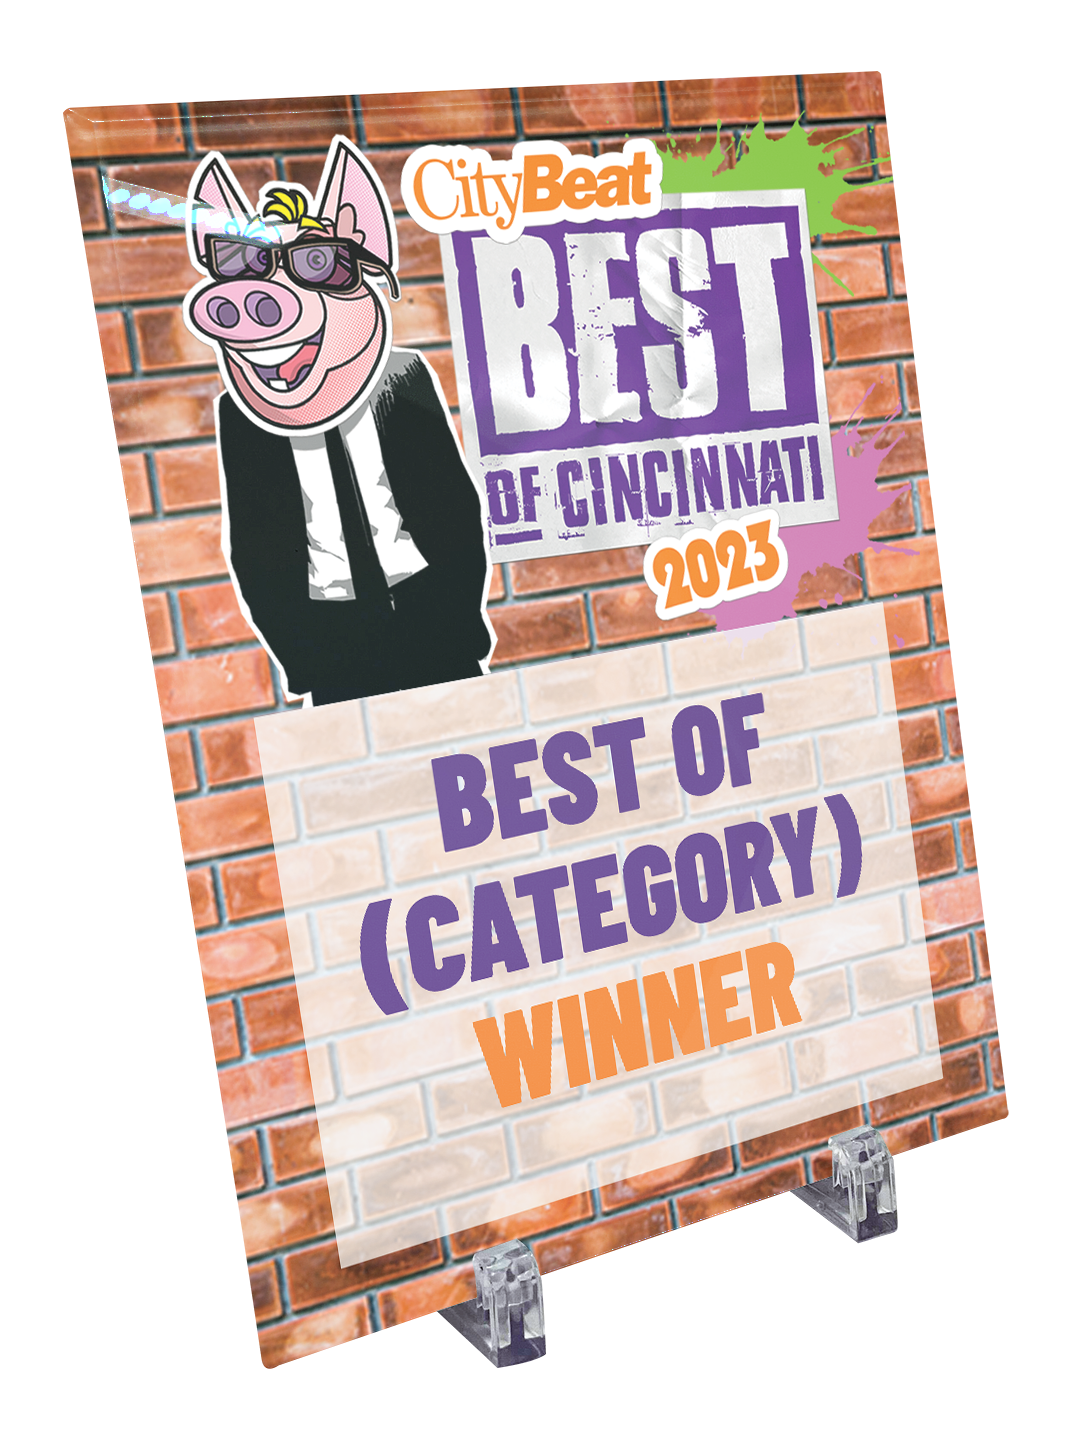 CityBeat "Best of Cincinnati" Award Plaque - Glass